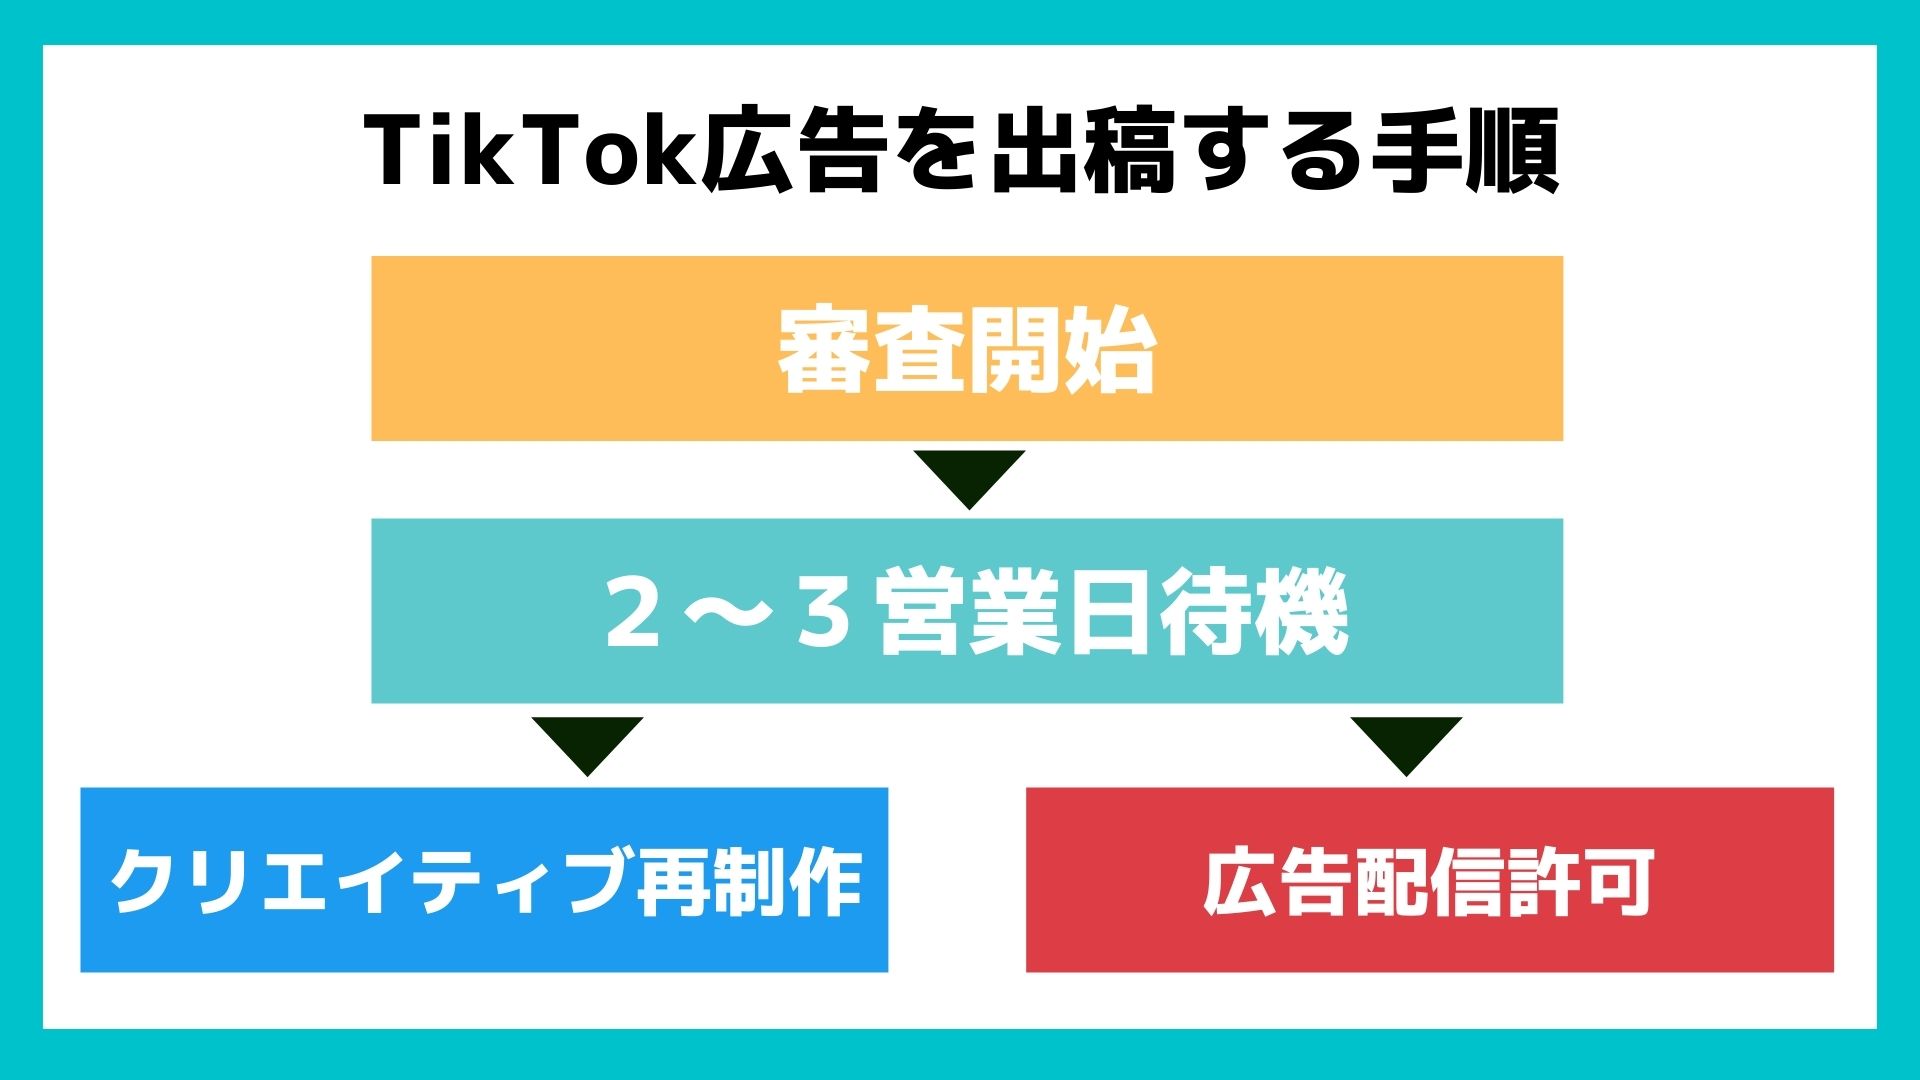 TikTok広告を出稿する手順